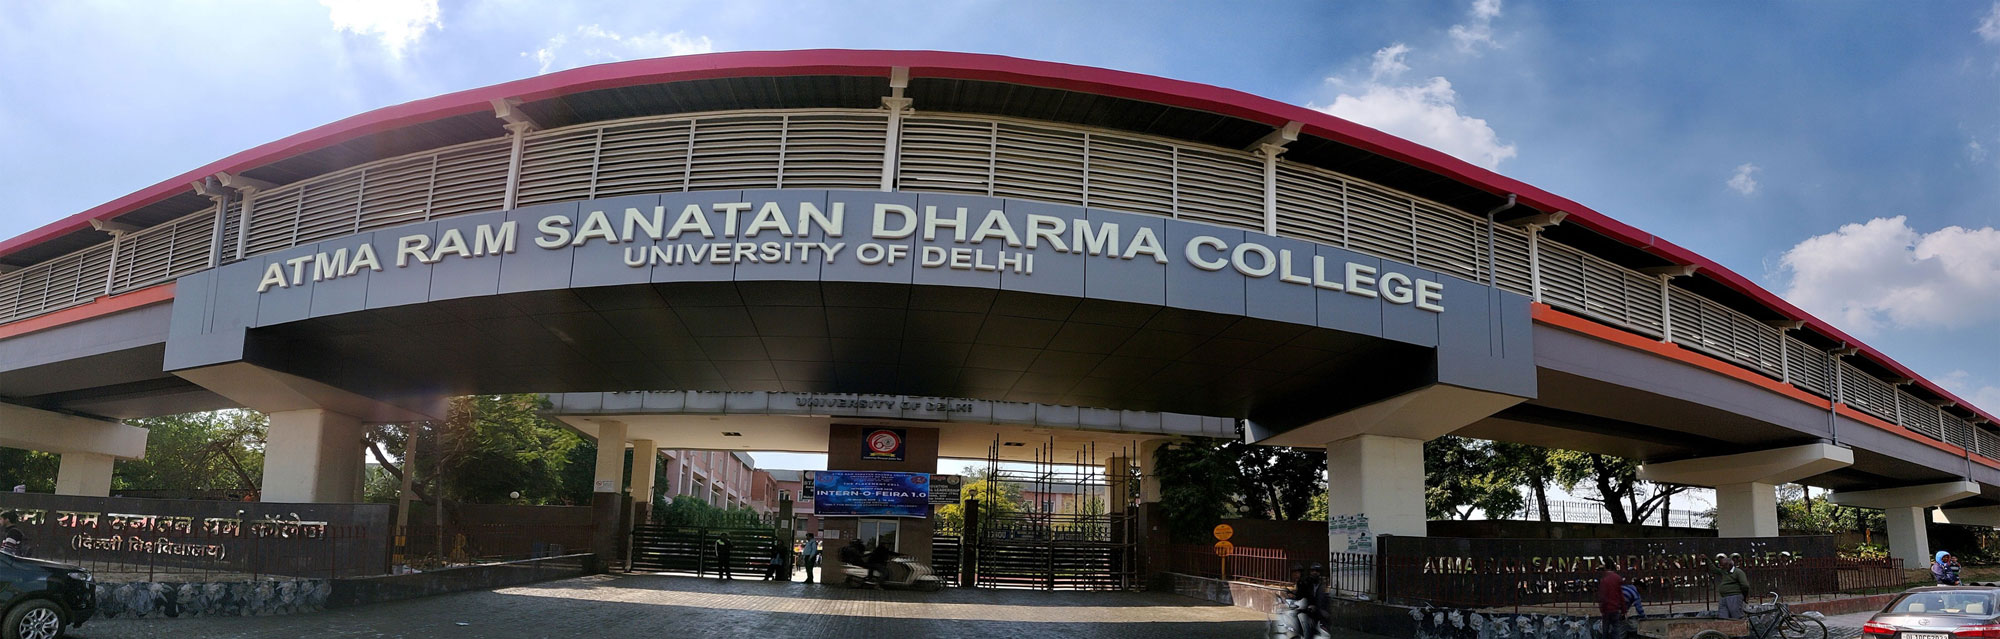 Atma Ram Sanatan Dharma College, New Delhi